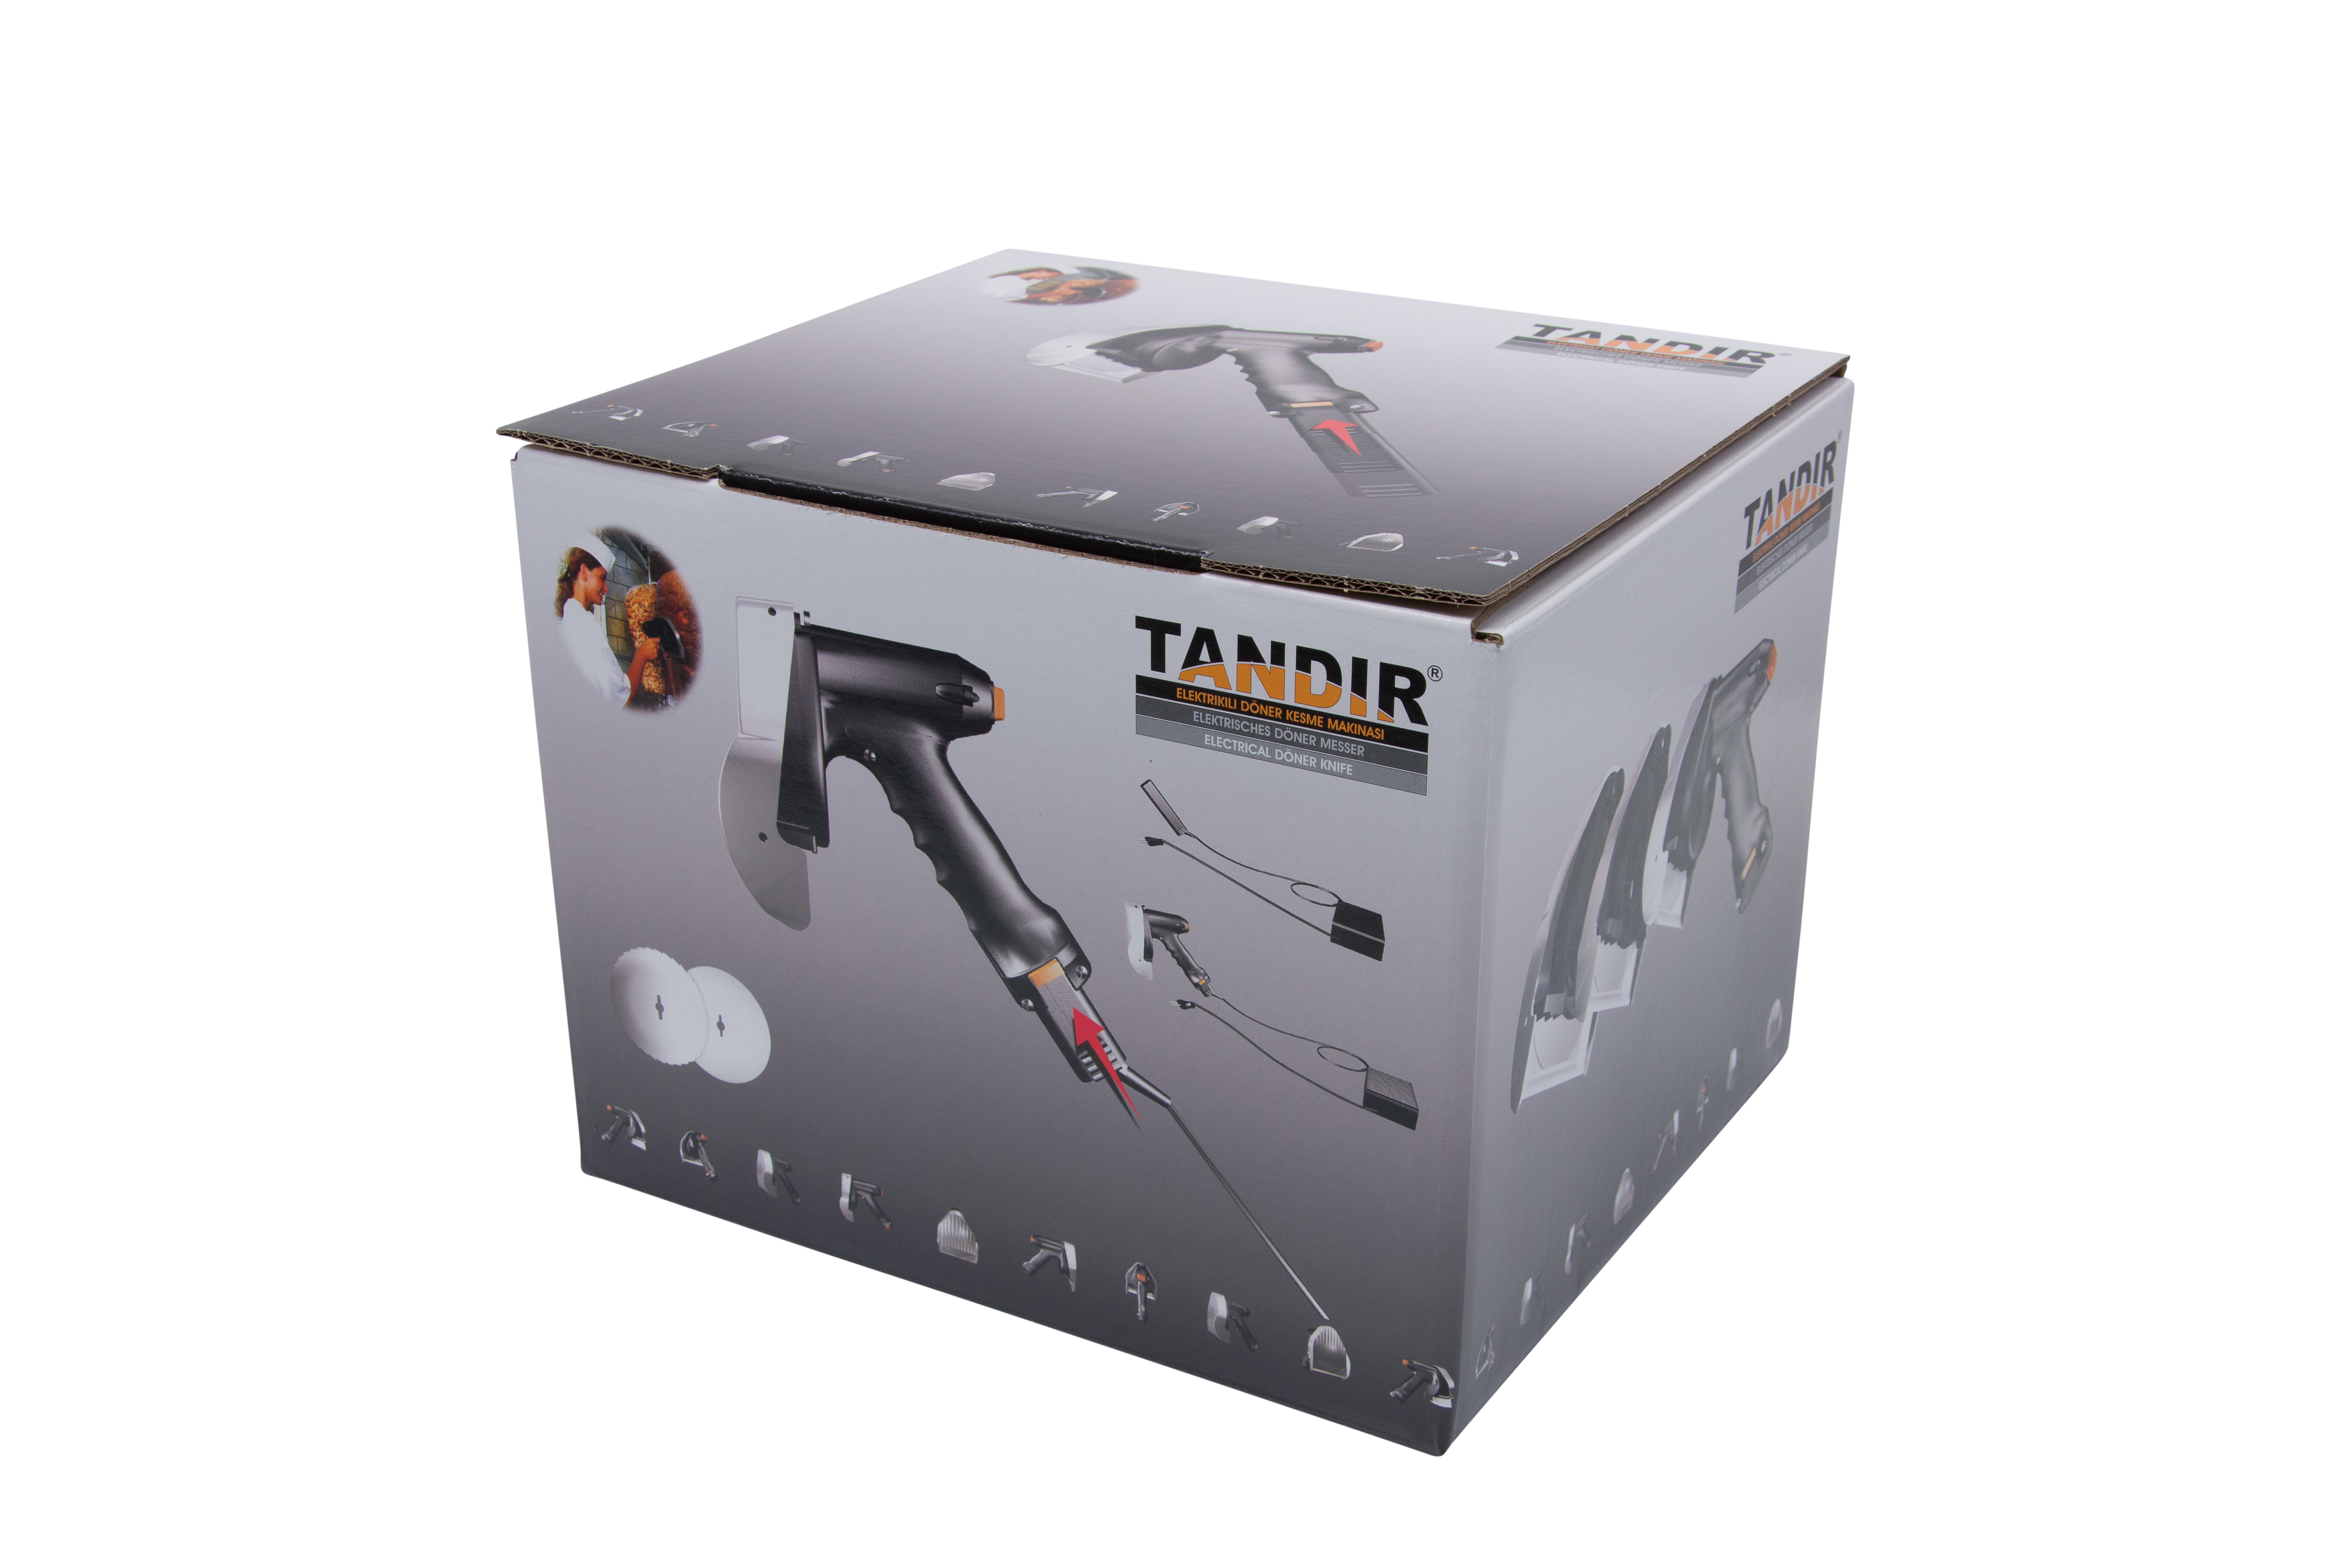 Tandir-Knife II 120 with transformer